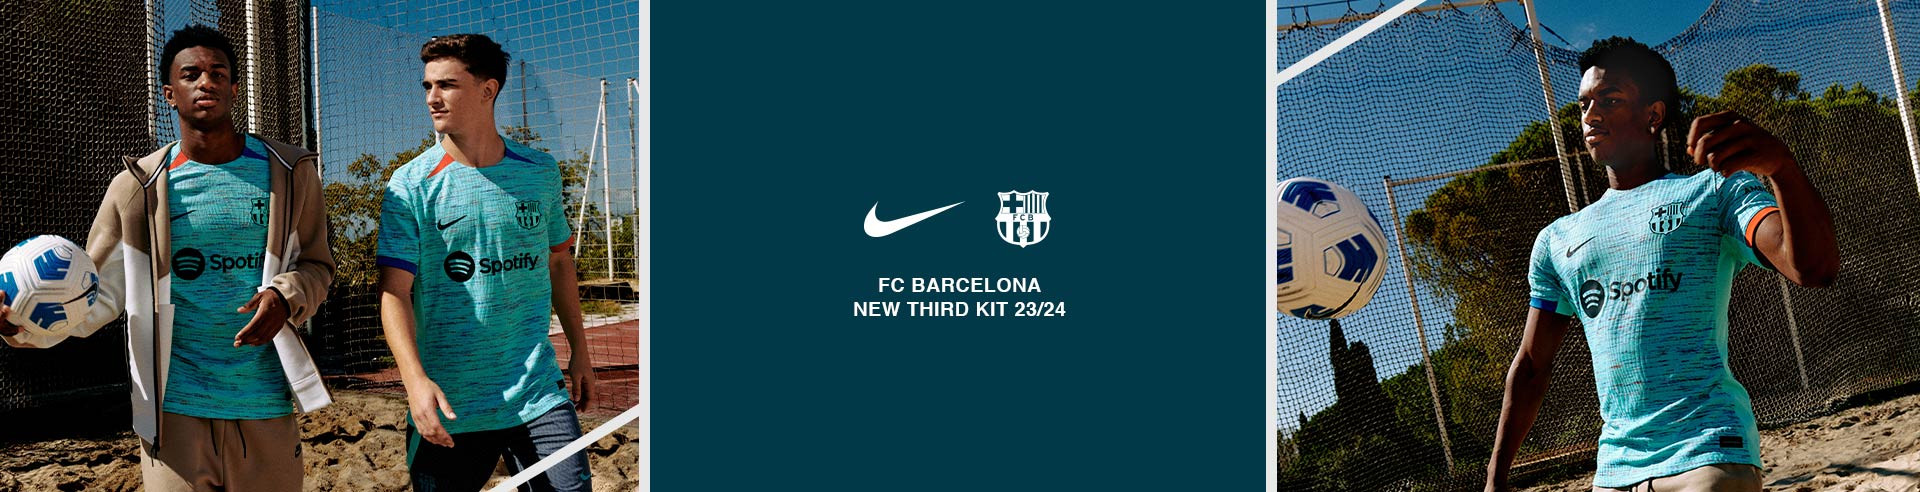 nike fc barcelona new third kit 23 24 all